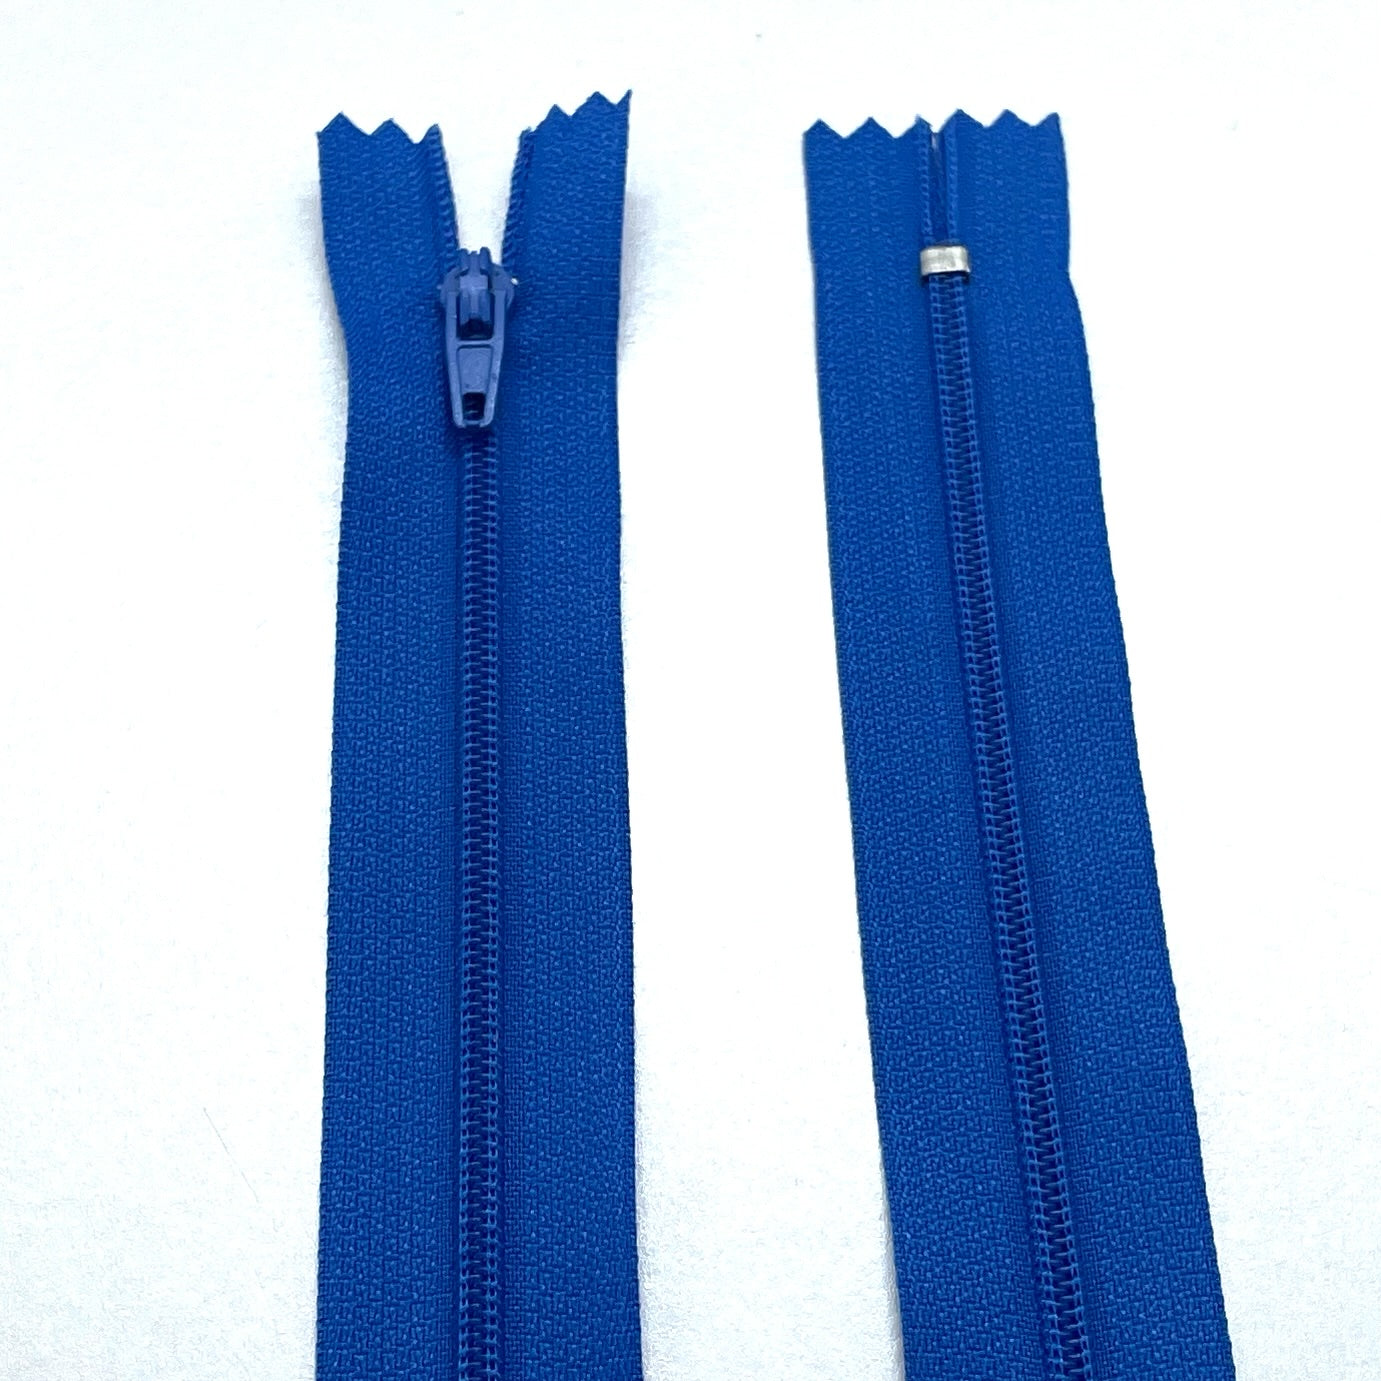 Nylon Zip standard size great project zipper in Royal Ble